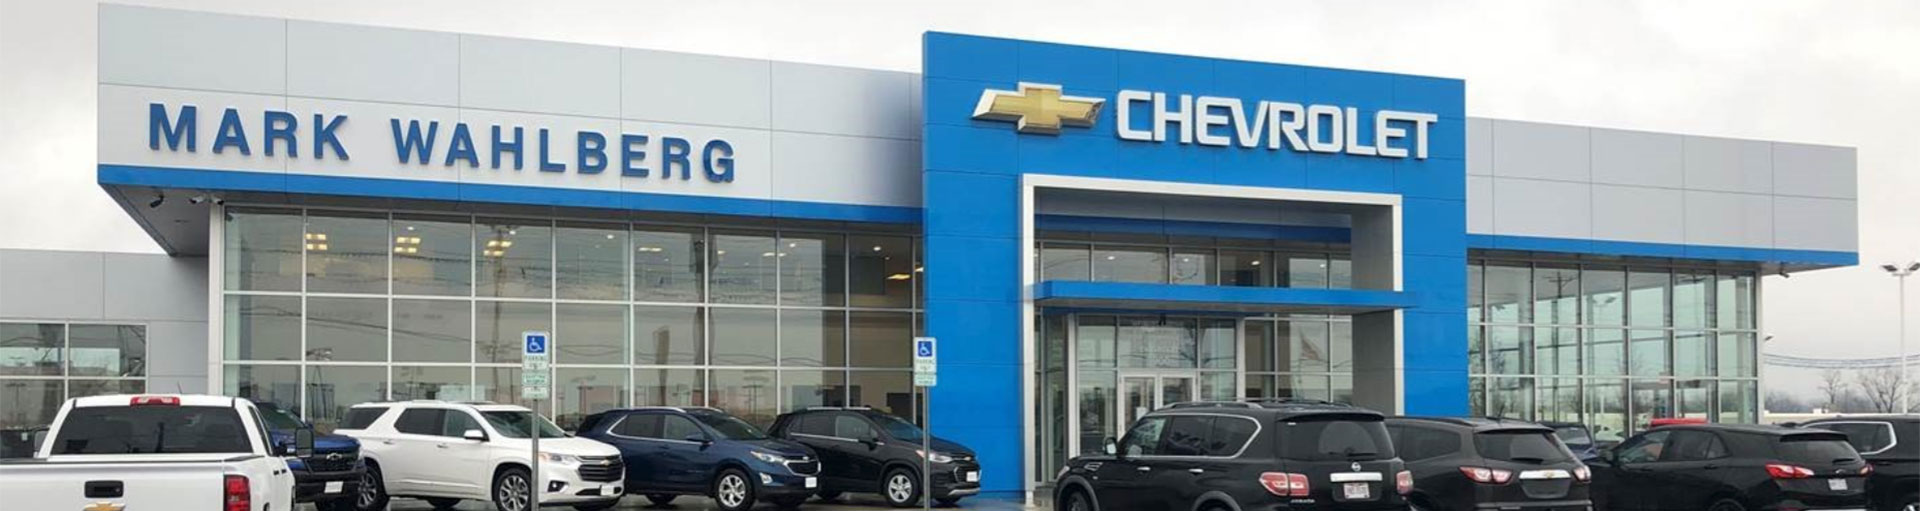 Mark Wahlberg Chevrolet Dealership